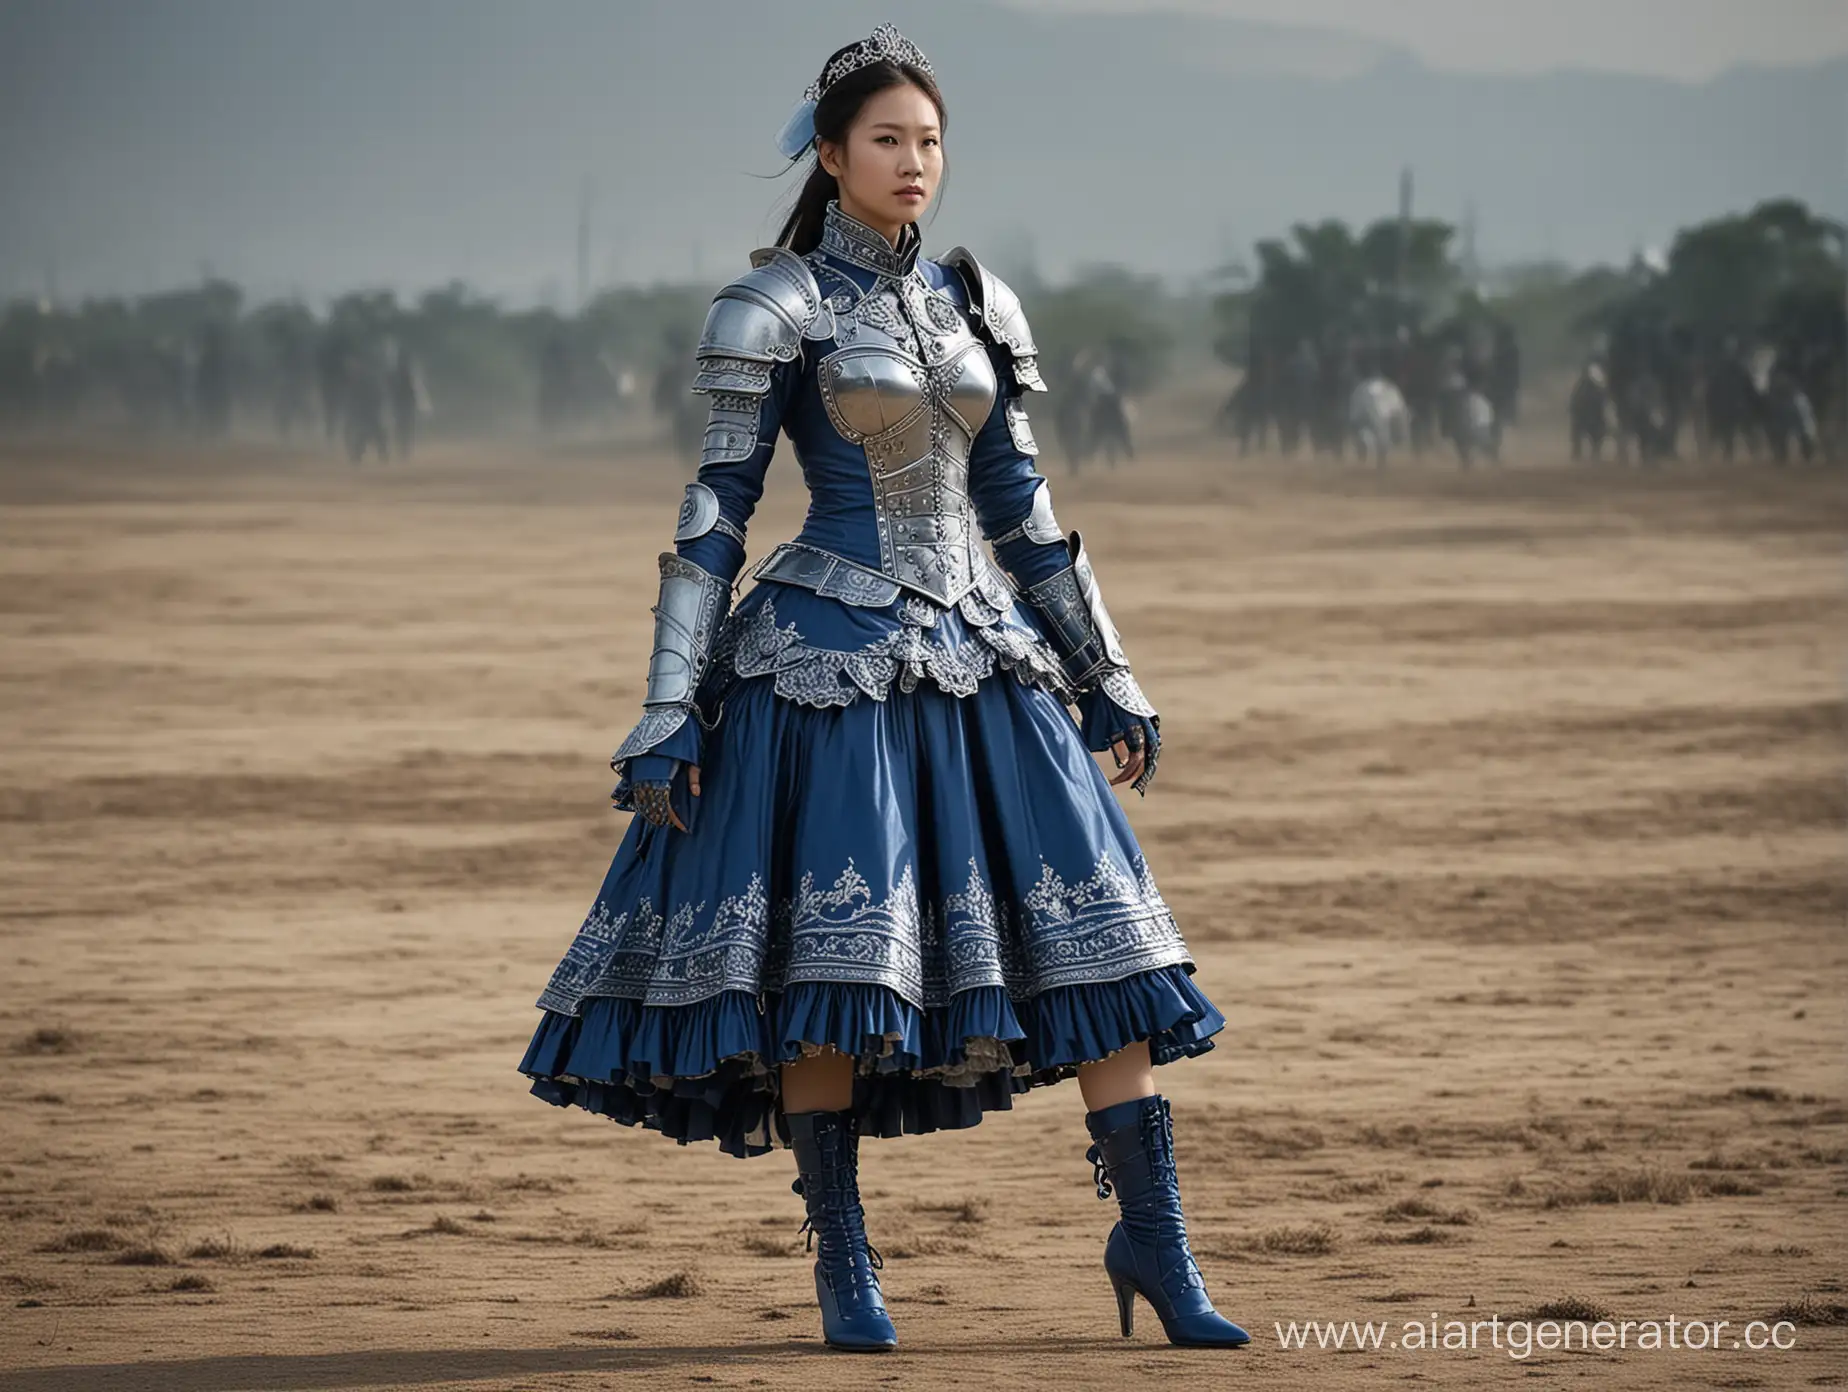 Miao-Ying-the-Gallant-Woman-Knight-of-Warhammer-Fantasy-Battle